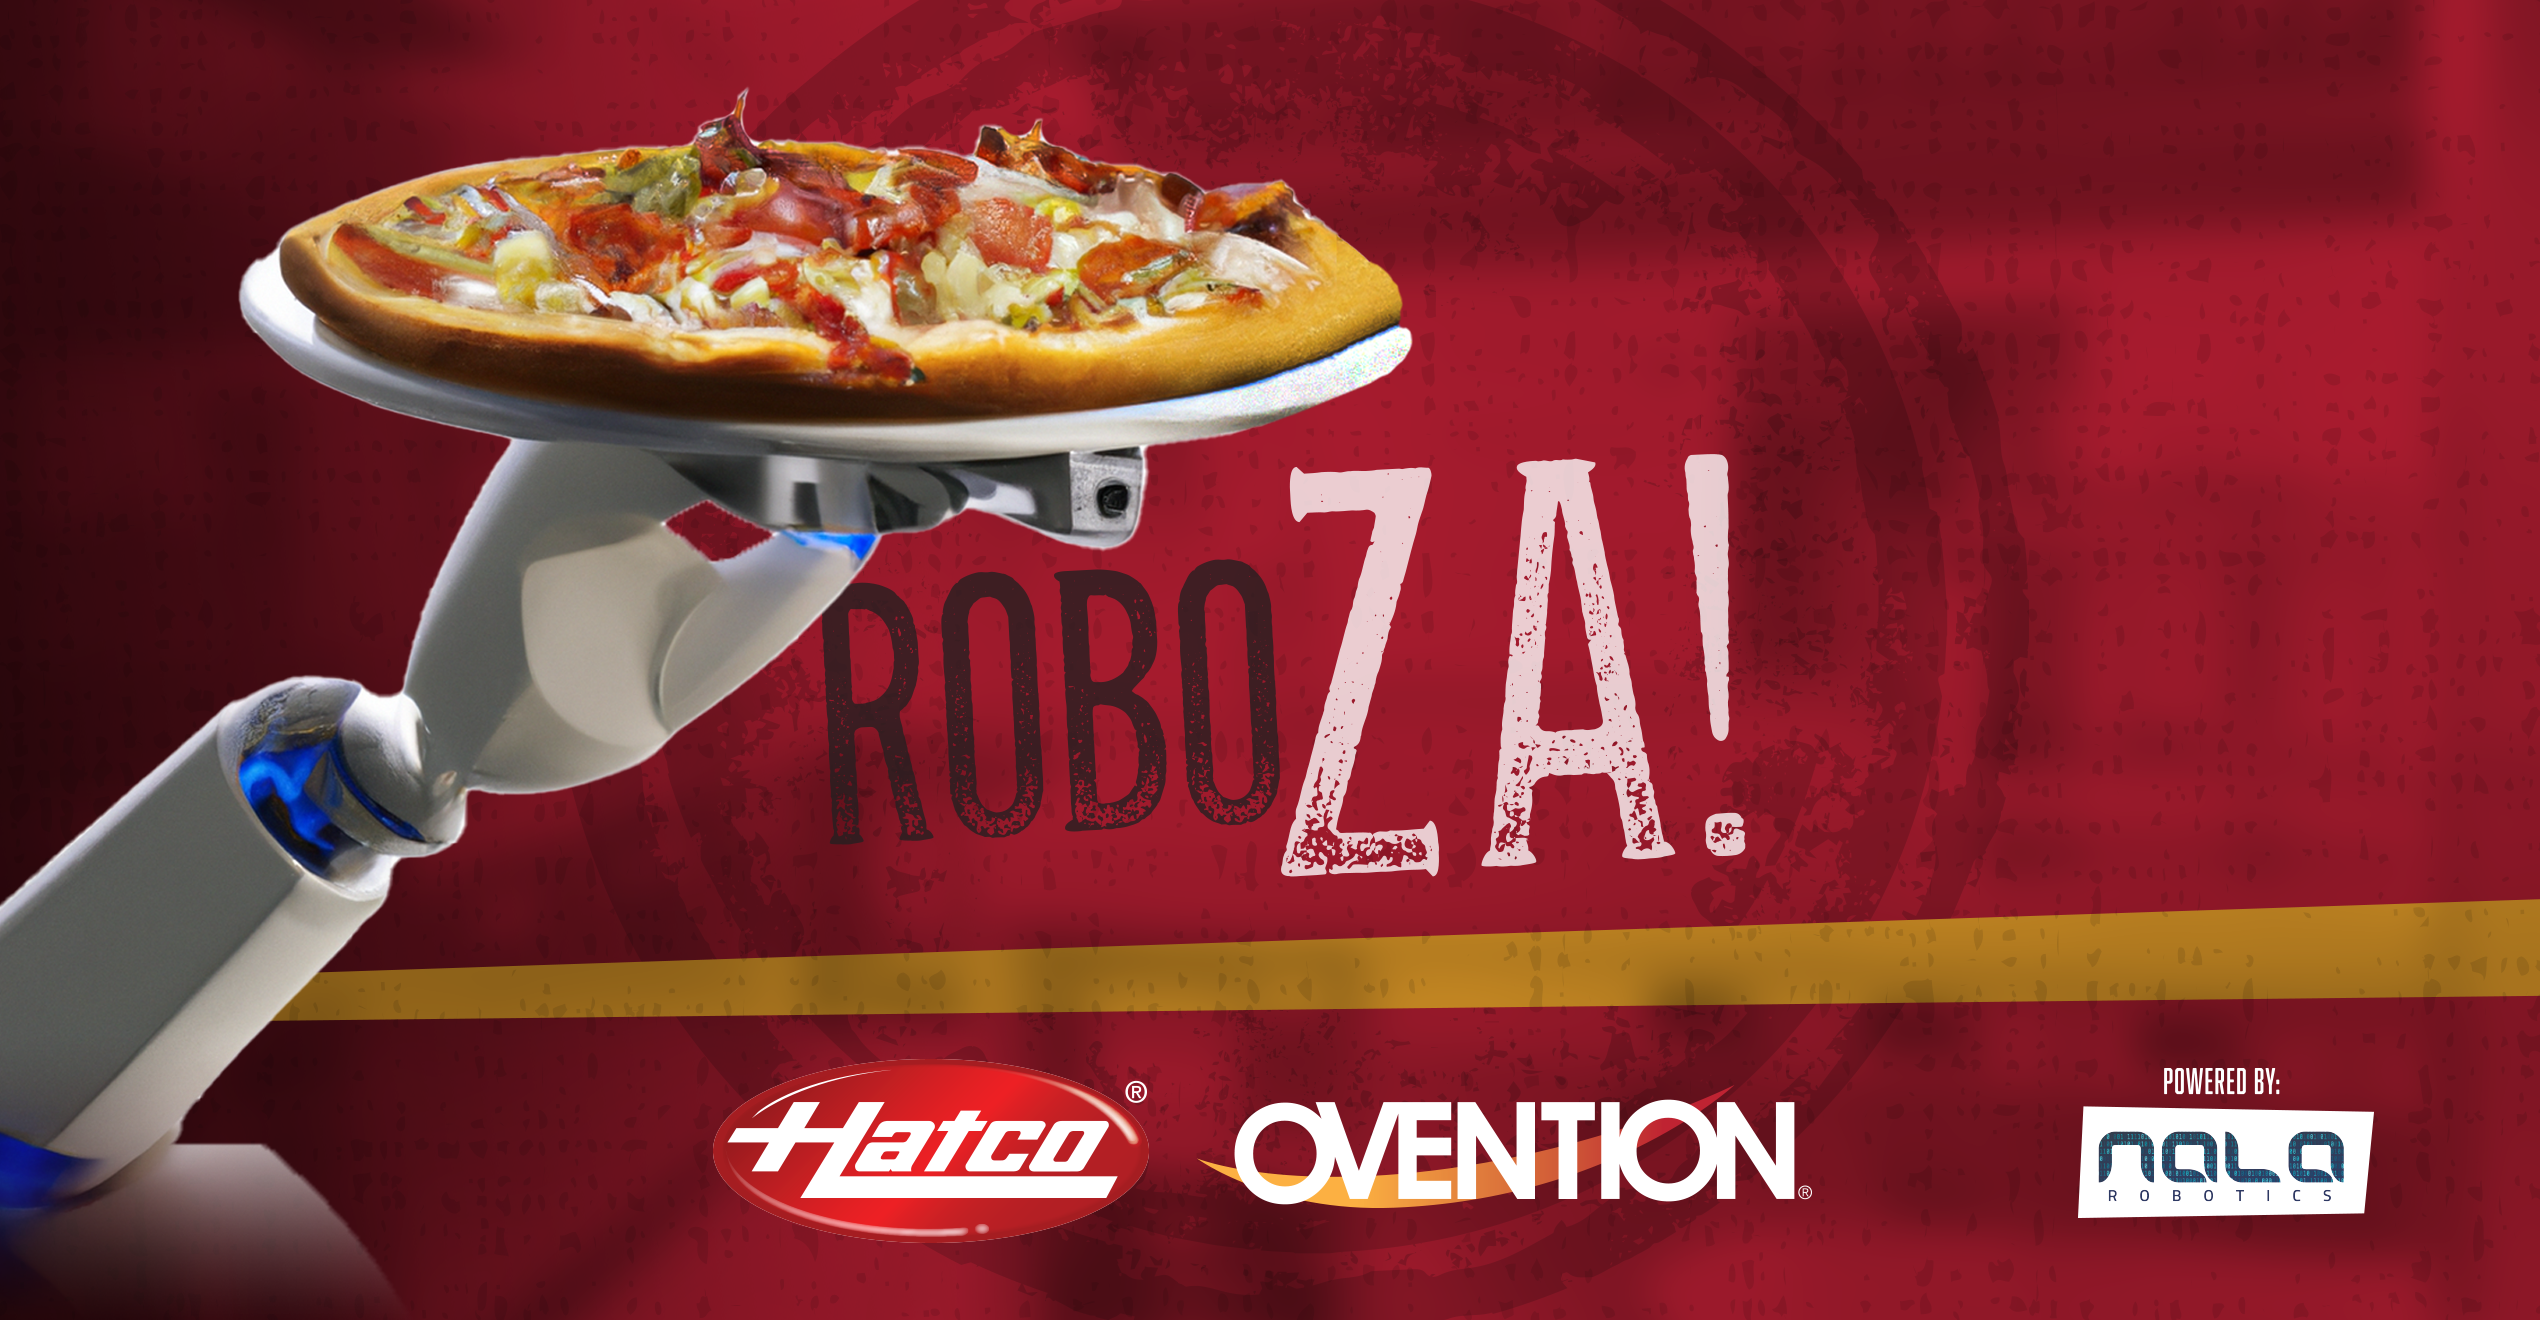 Nala Robotics, Ovention and Hatco Corporation to Introduce Robotic Pizza Solution